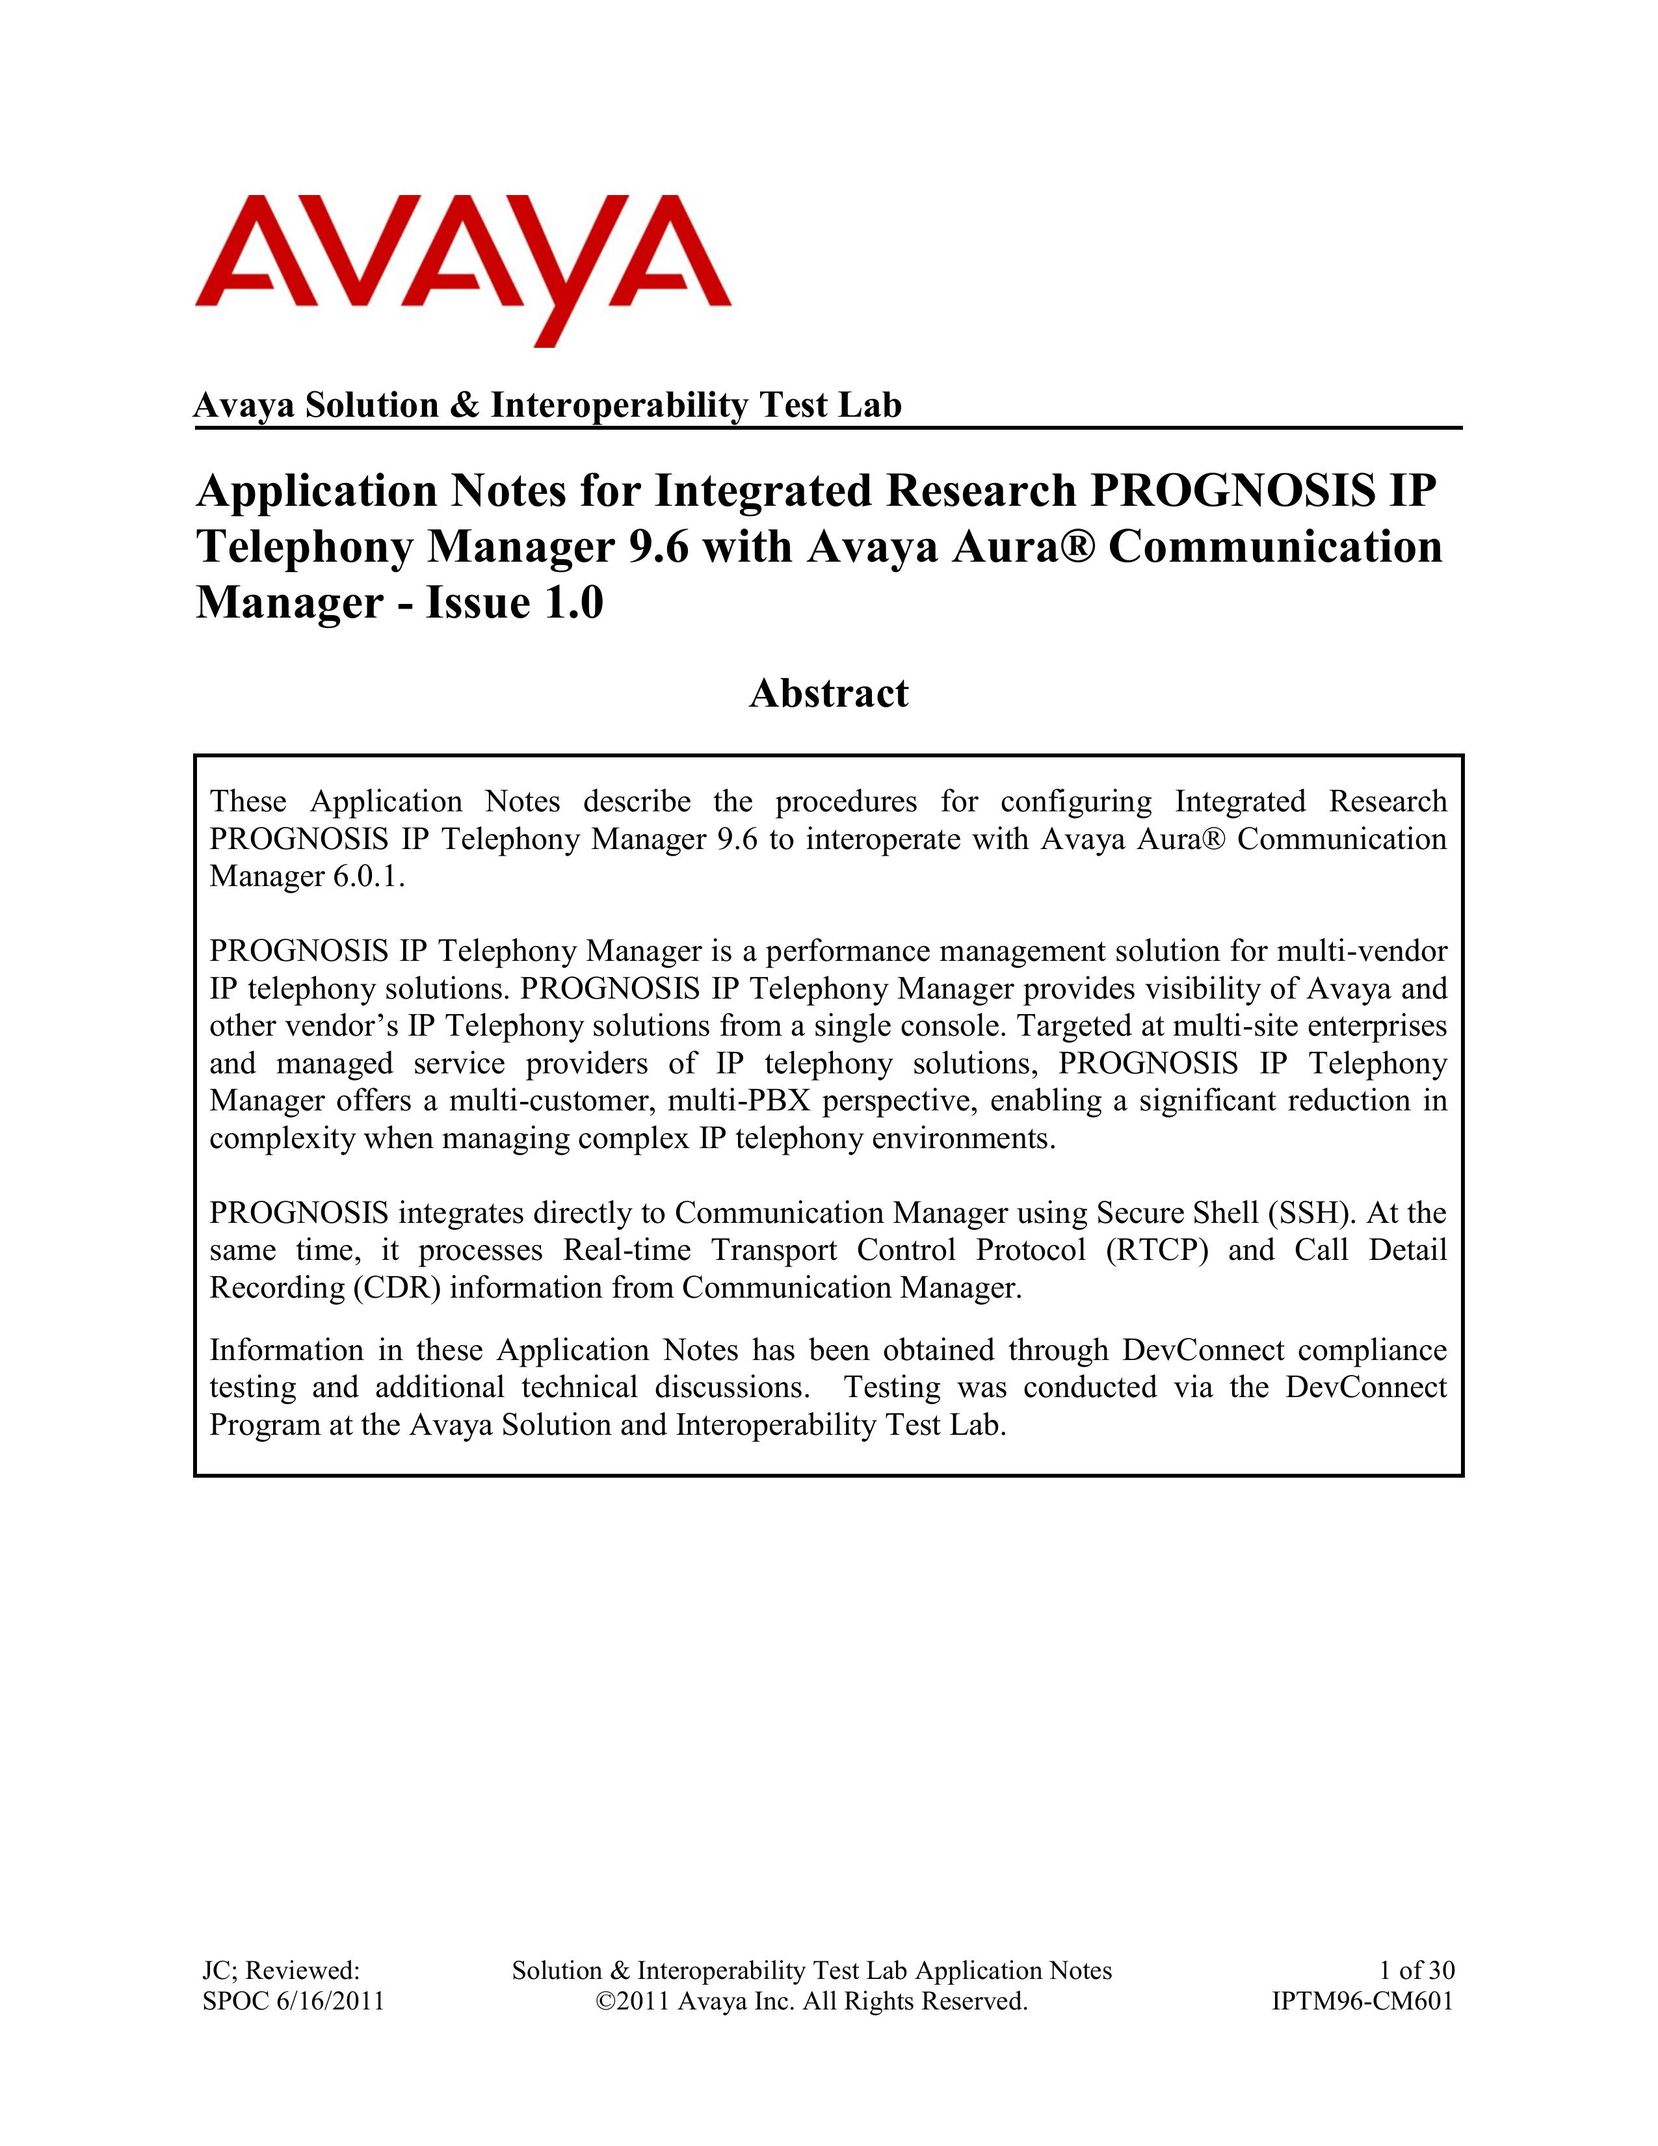 Avaya IPTM96-CM601 Telephone Accessories User Manual